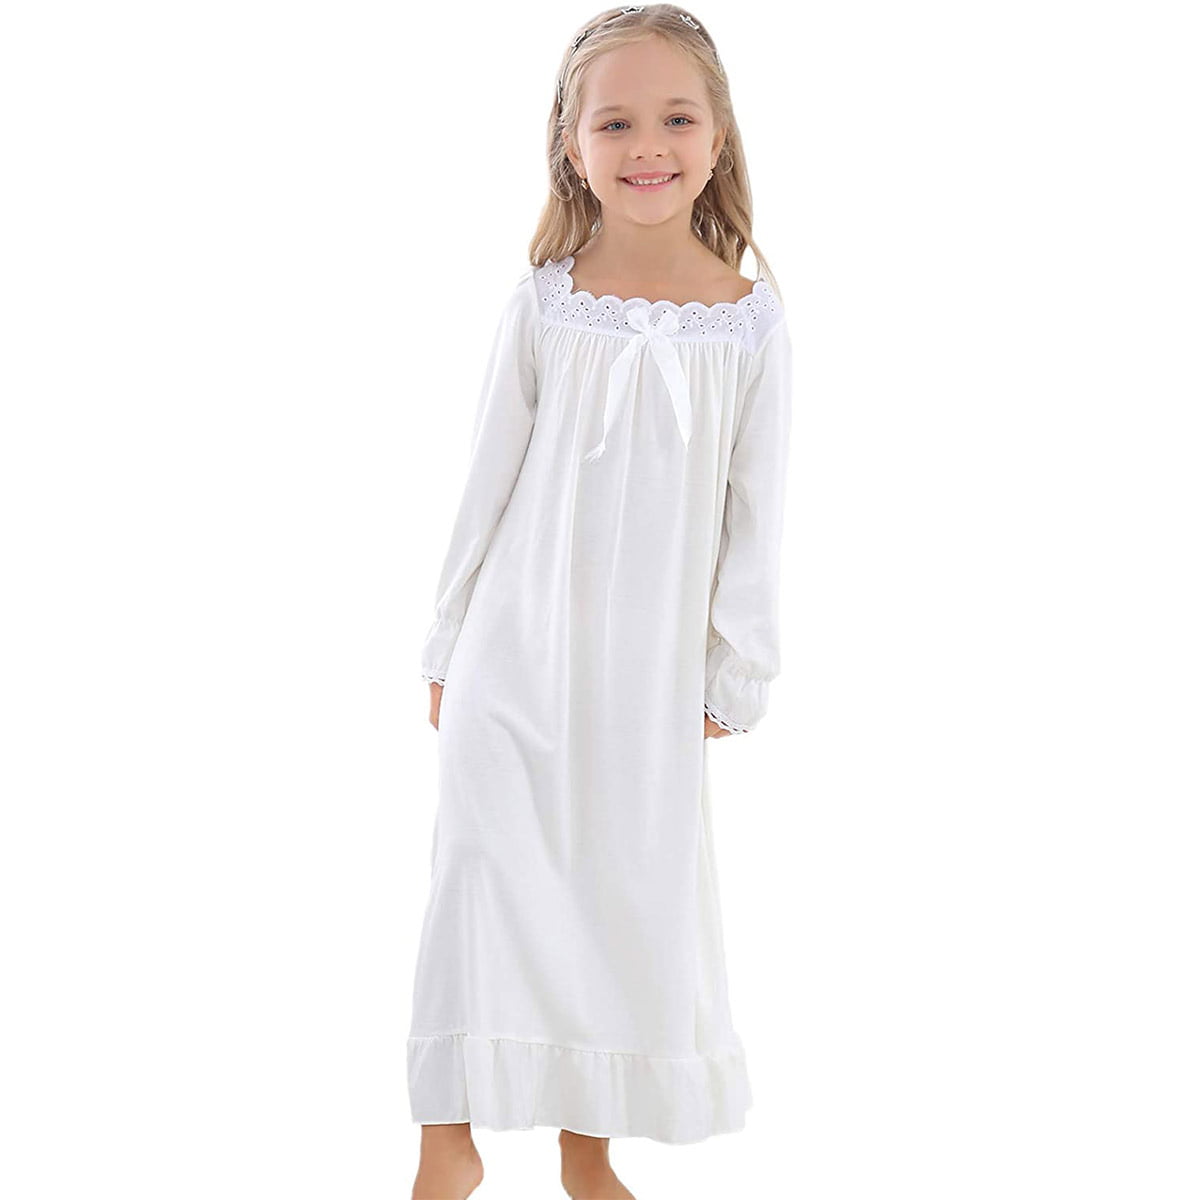 Girls Princess Nightgowns Lace Sleep Dress Kids Sleepwear 3-12 Years 